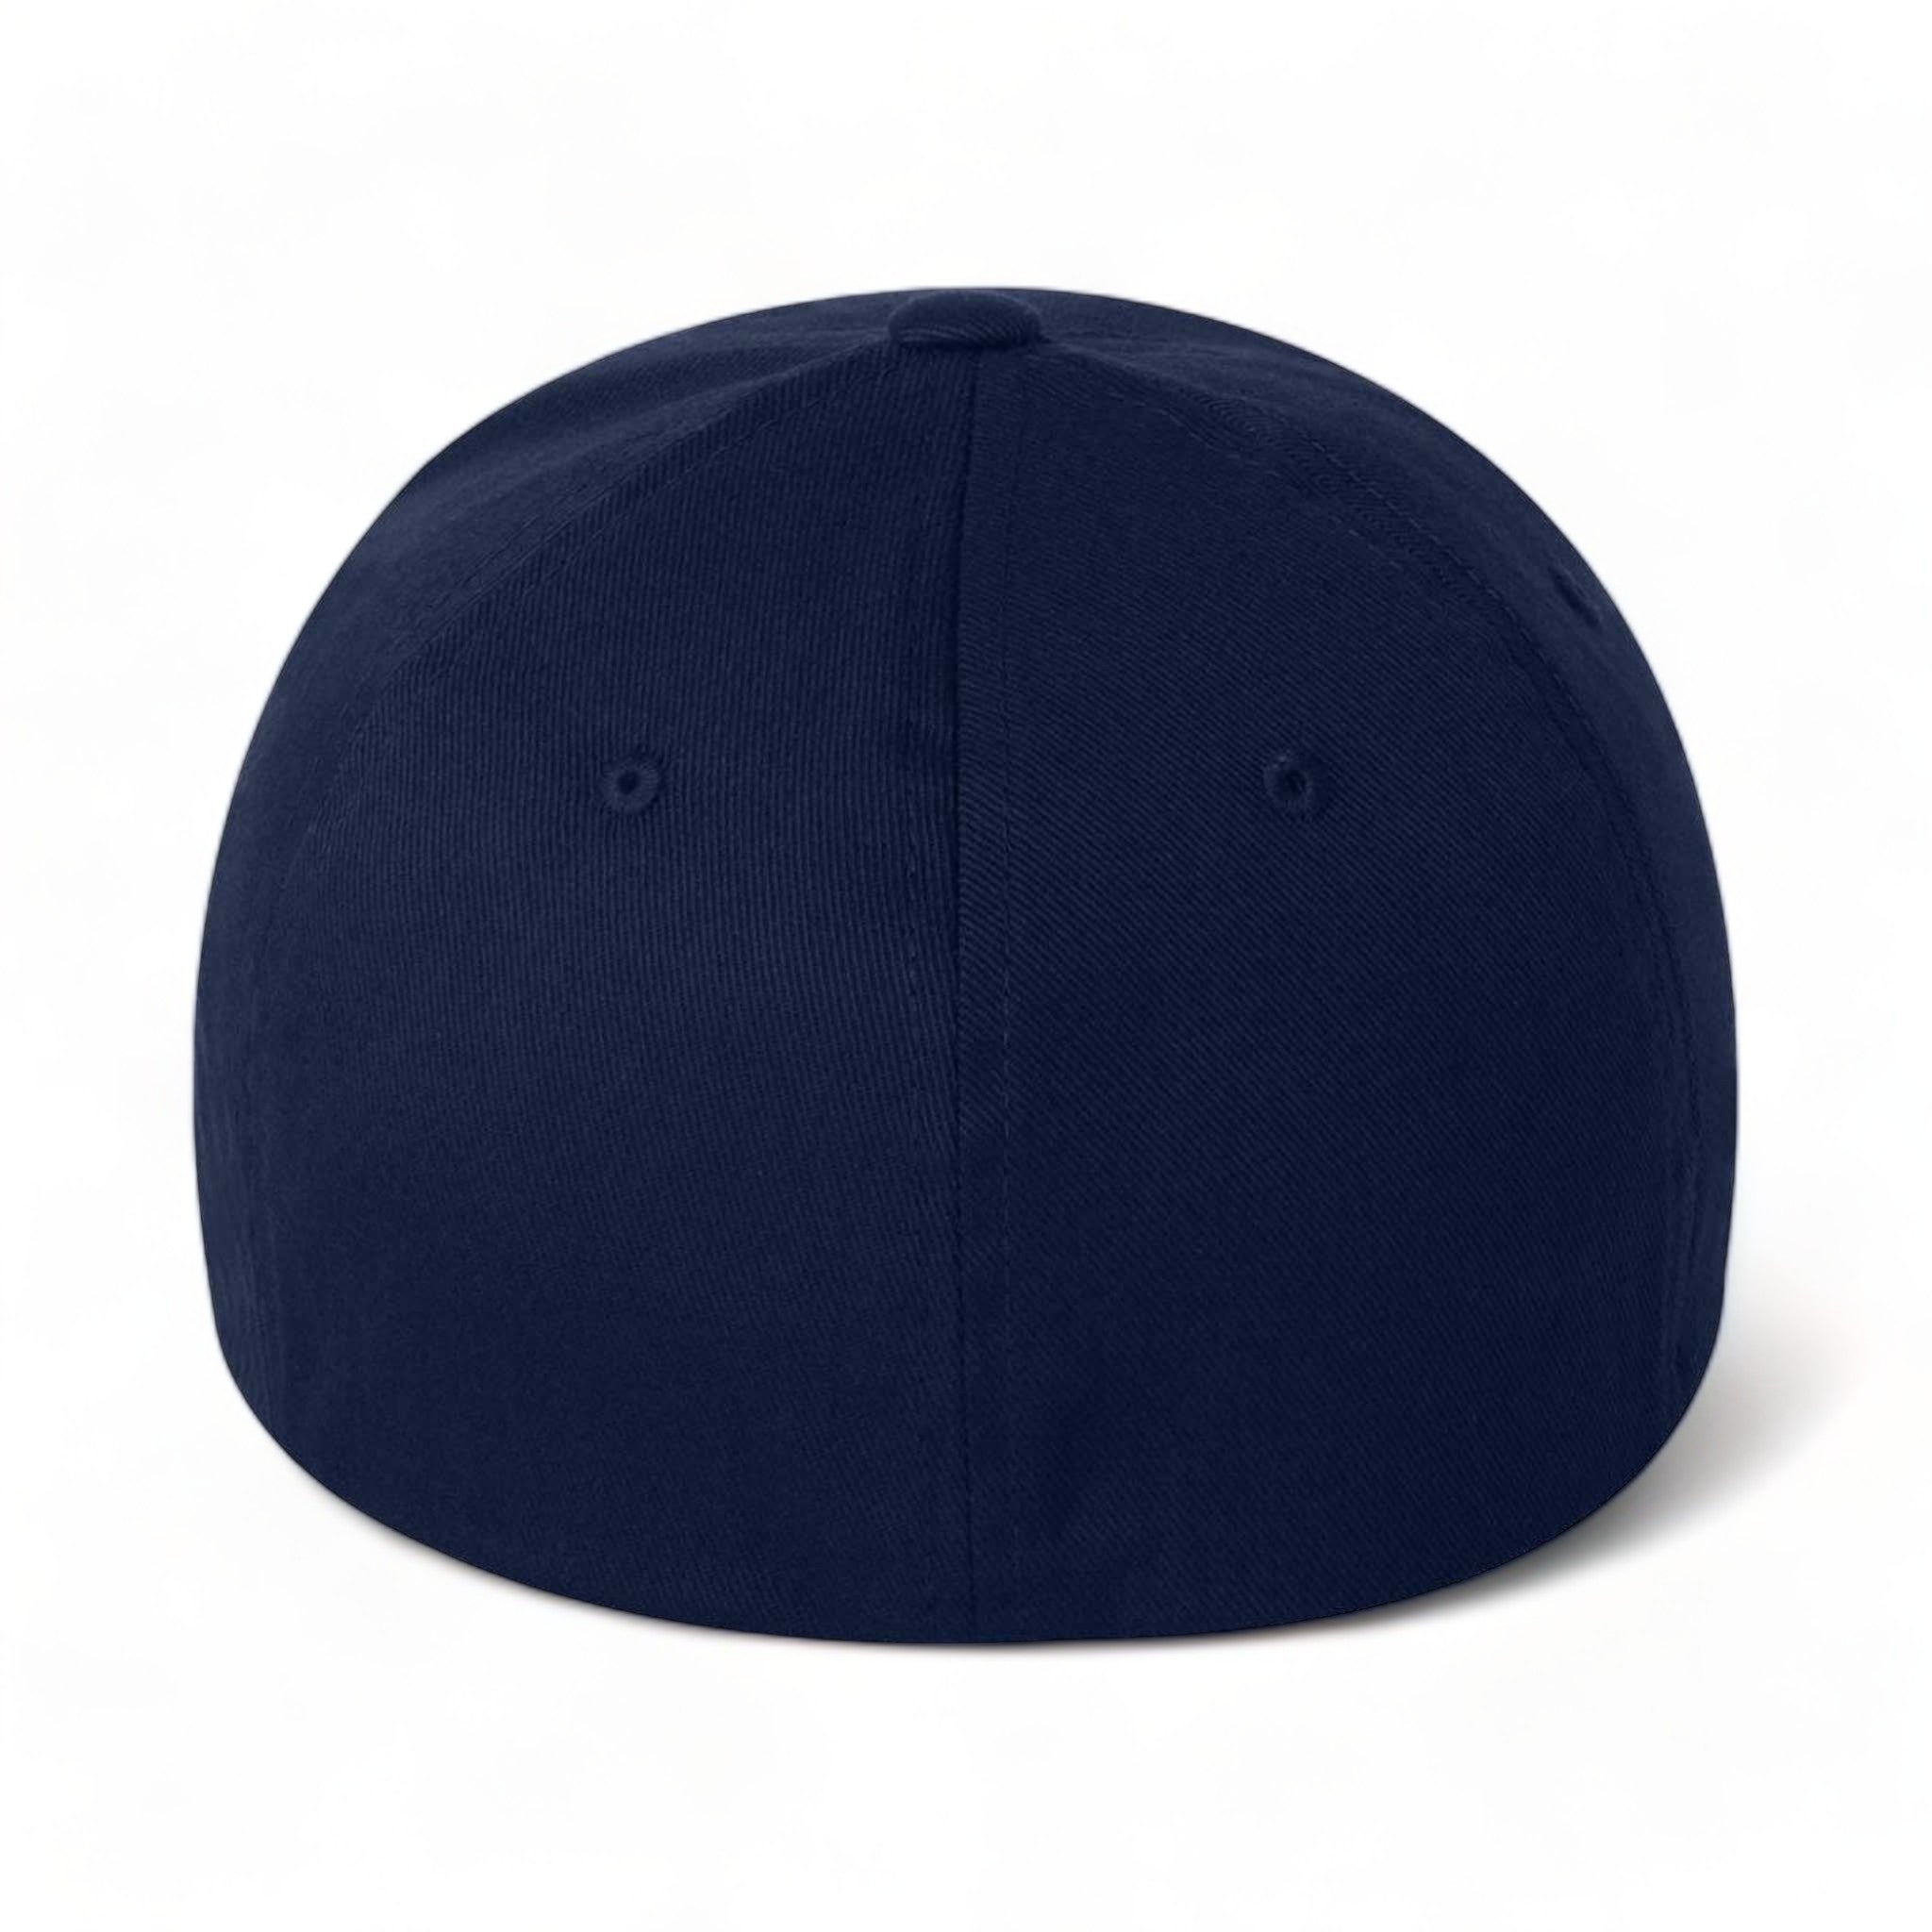 Back view of Flexfit 6277 custom hat in navy